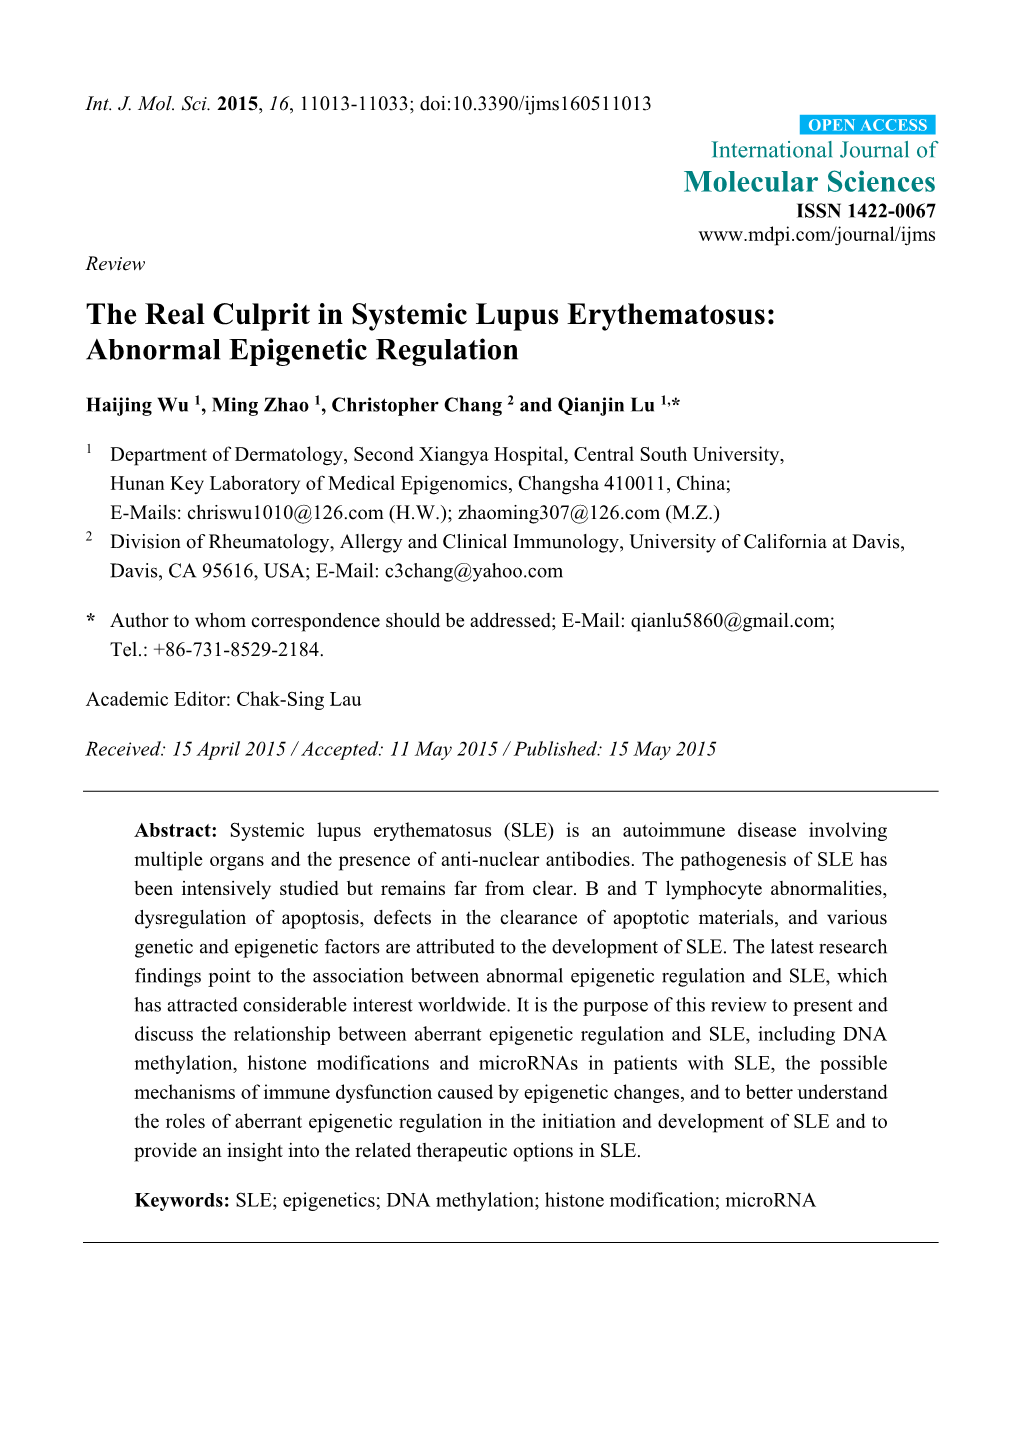 The Real Culprit in Systemic Lupus Erythematosus: Abnormal Epigenetic Regulation